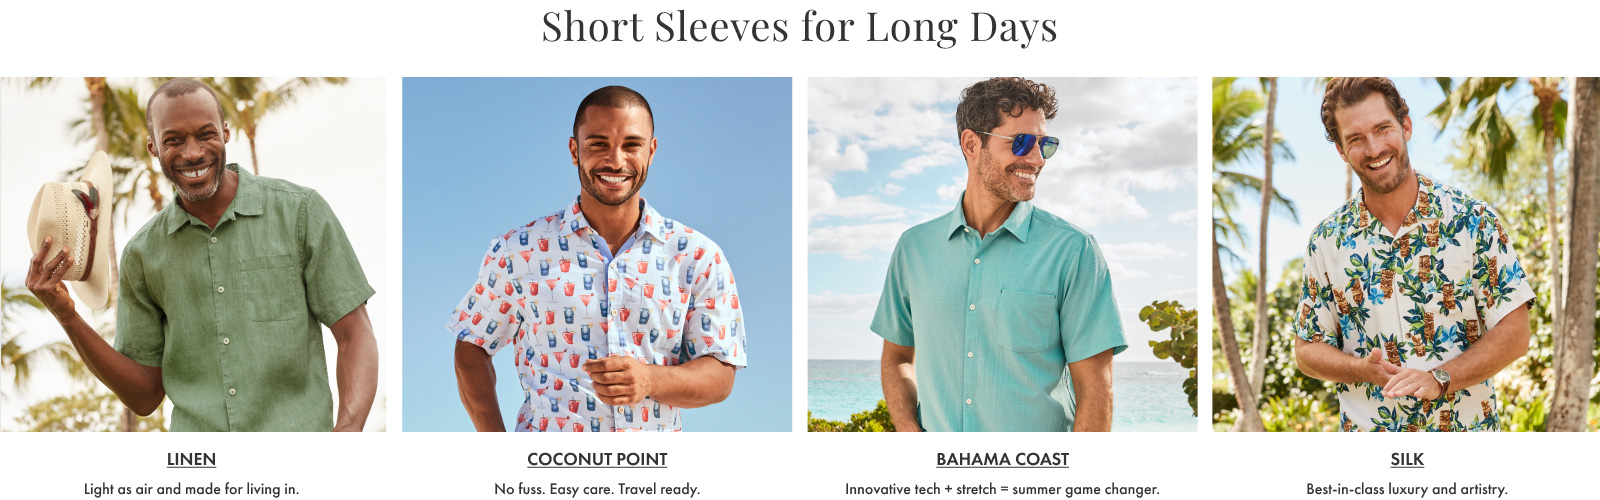 Short Sleeves for Long Days: Linen, Coconut Point, Bahama Coast, Silk